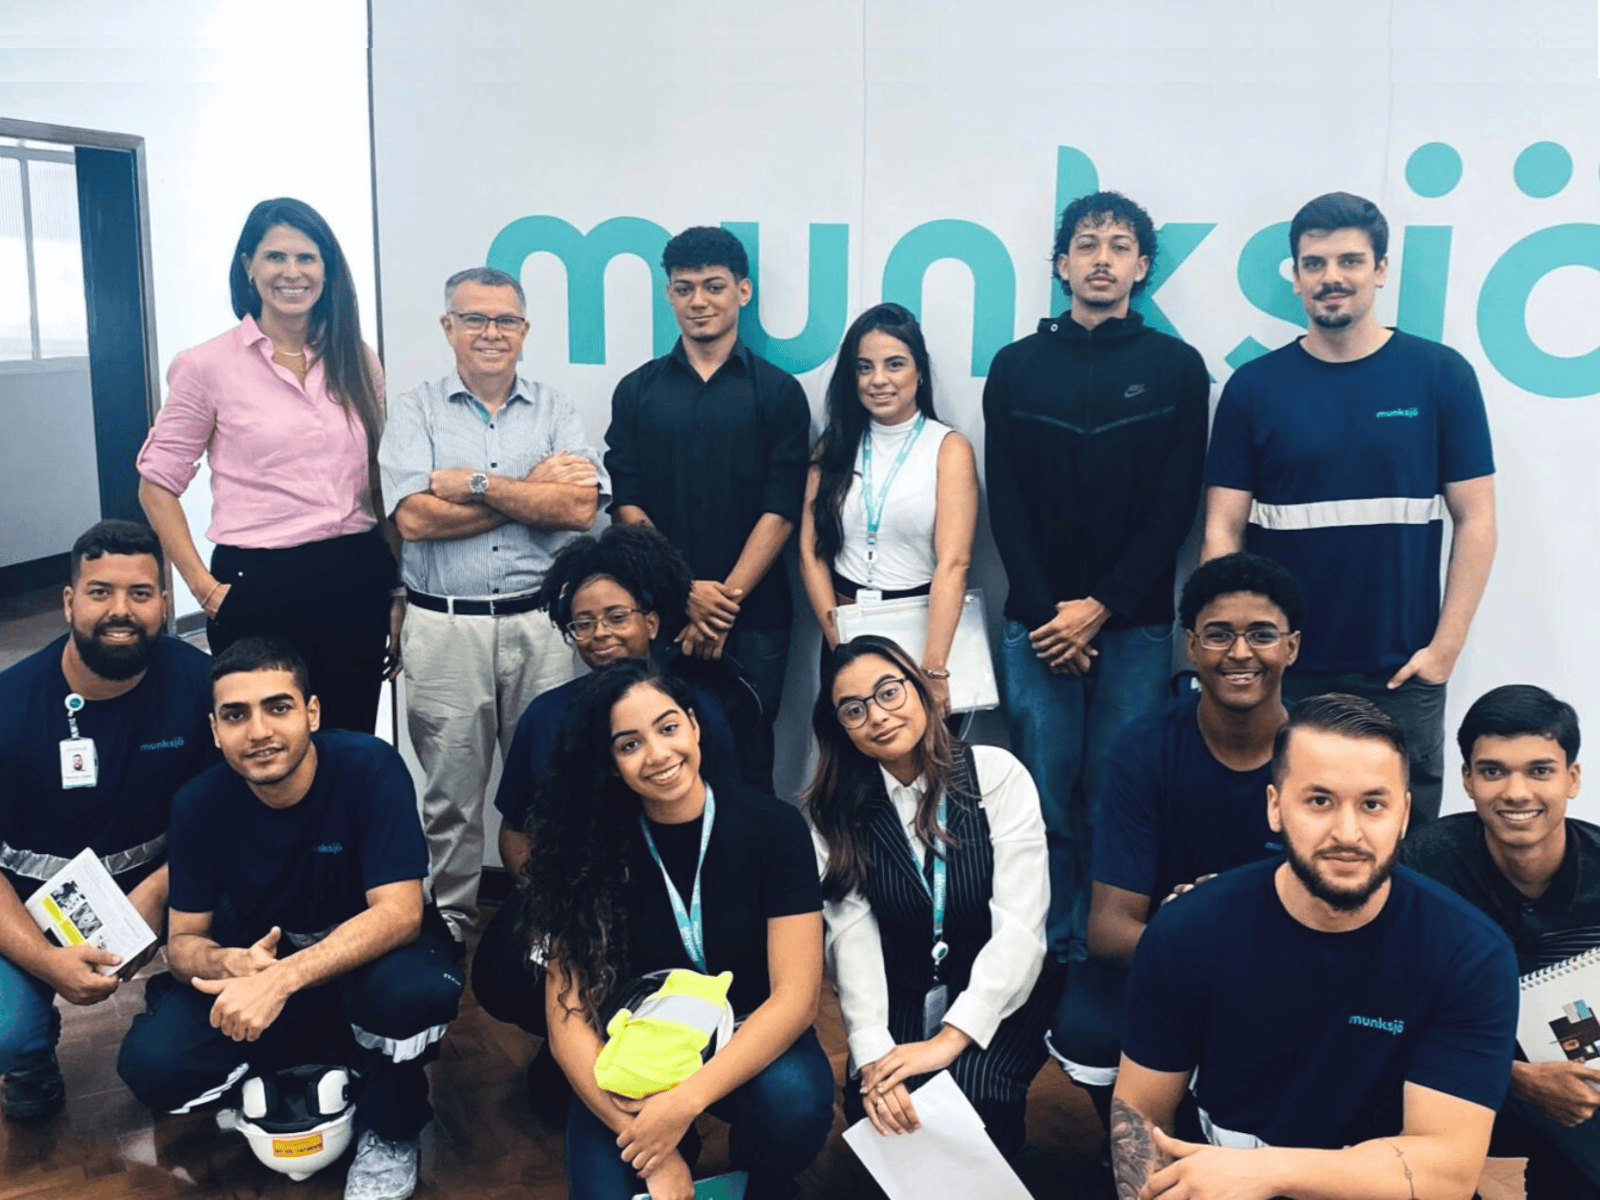 Munksjö Caieiras promotes integration between interns and leadership through its NextGen Program